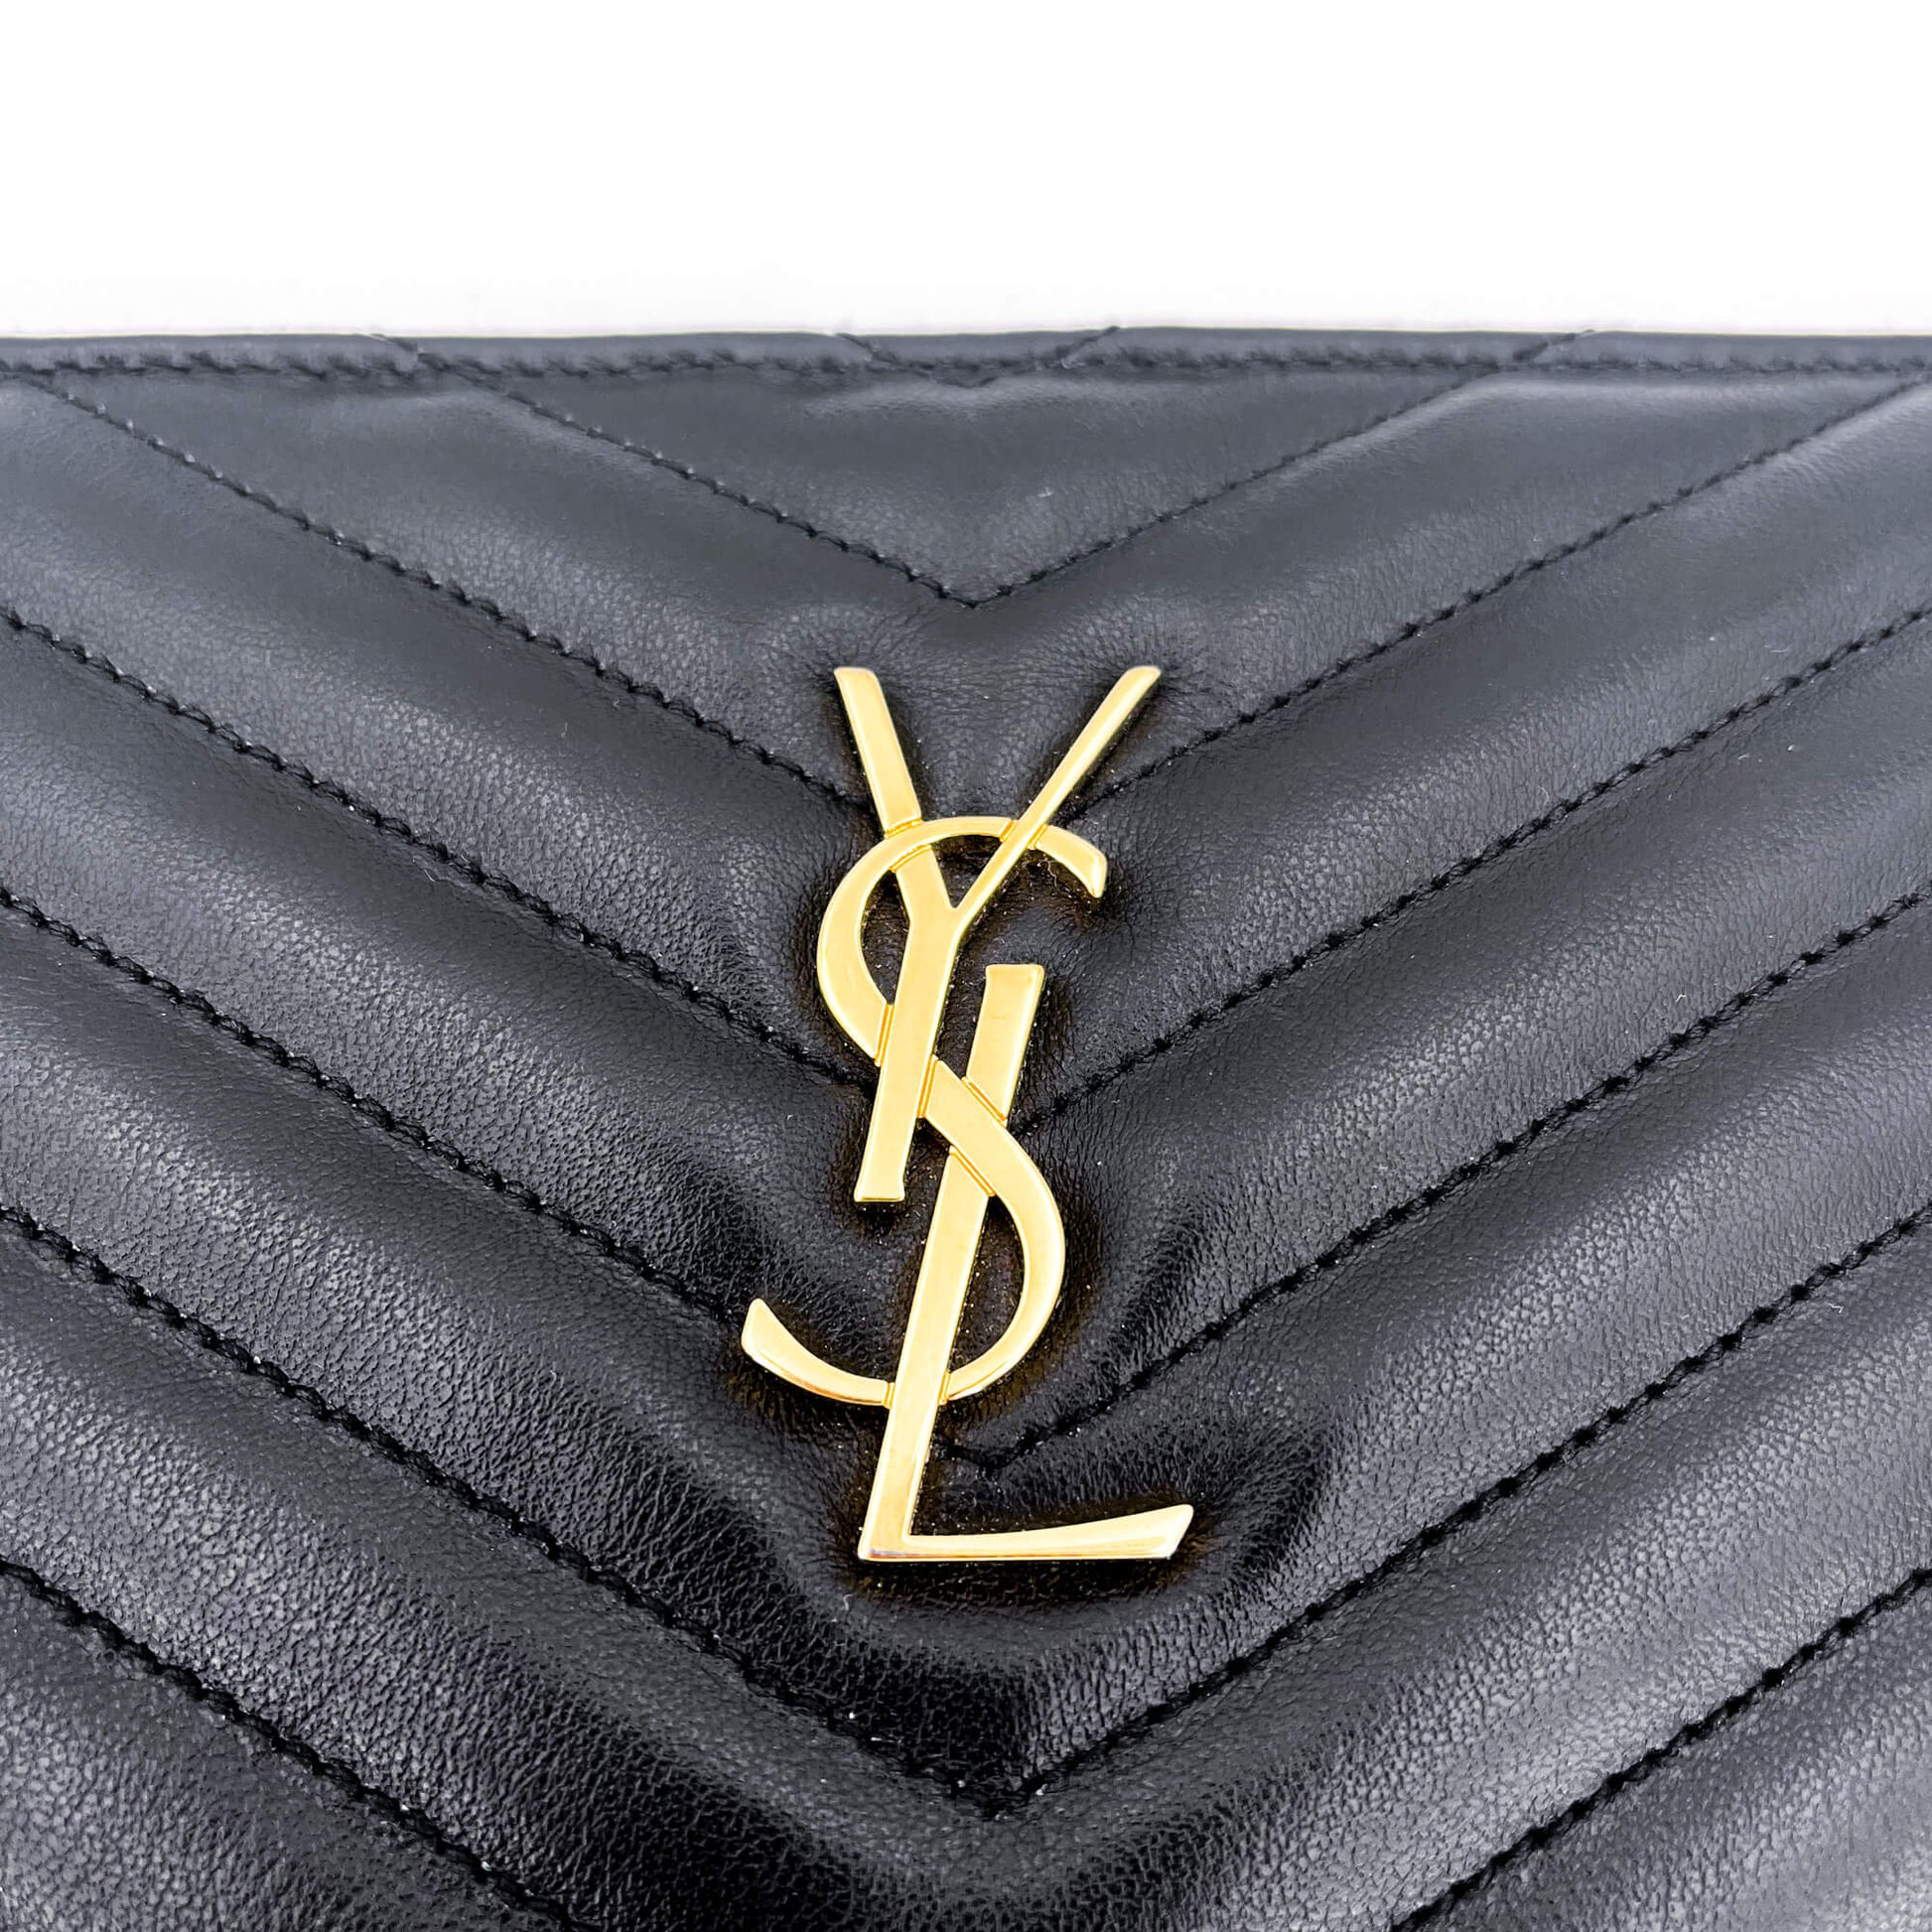 New jolie leather clutch bag Saint Laurent Black in Leather - 36358445